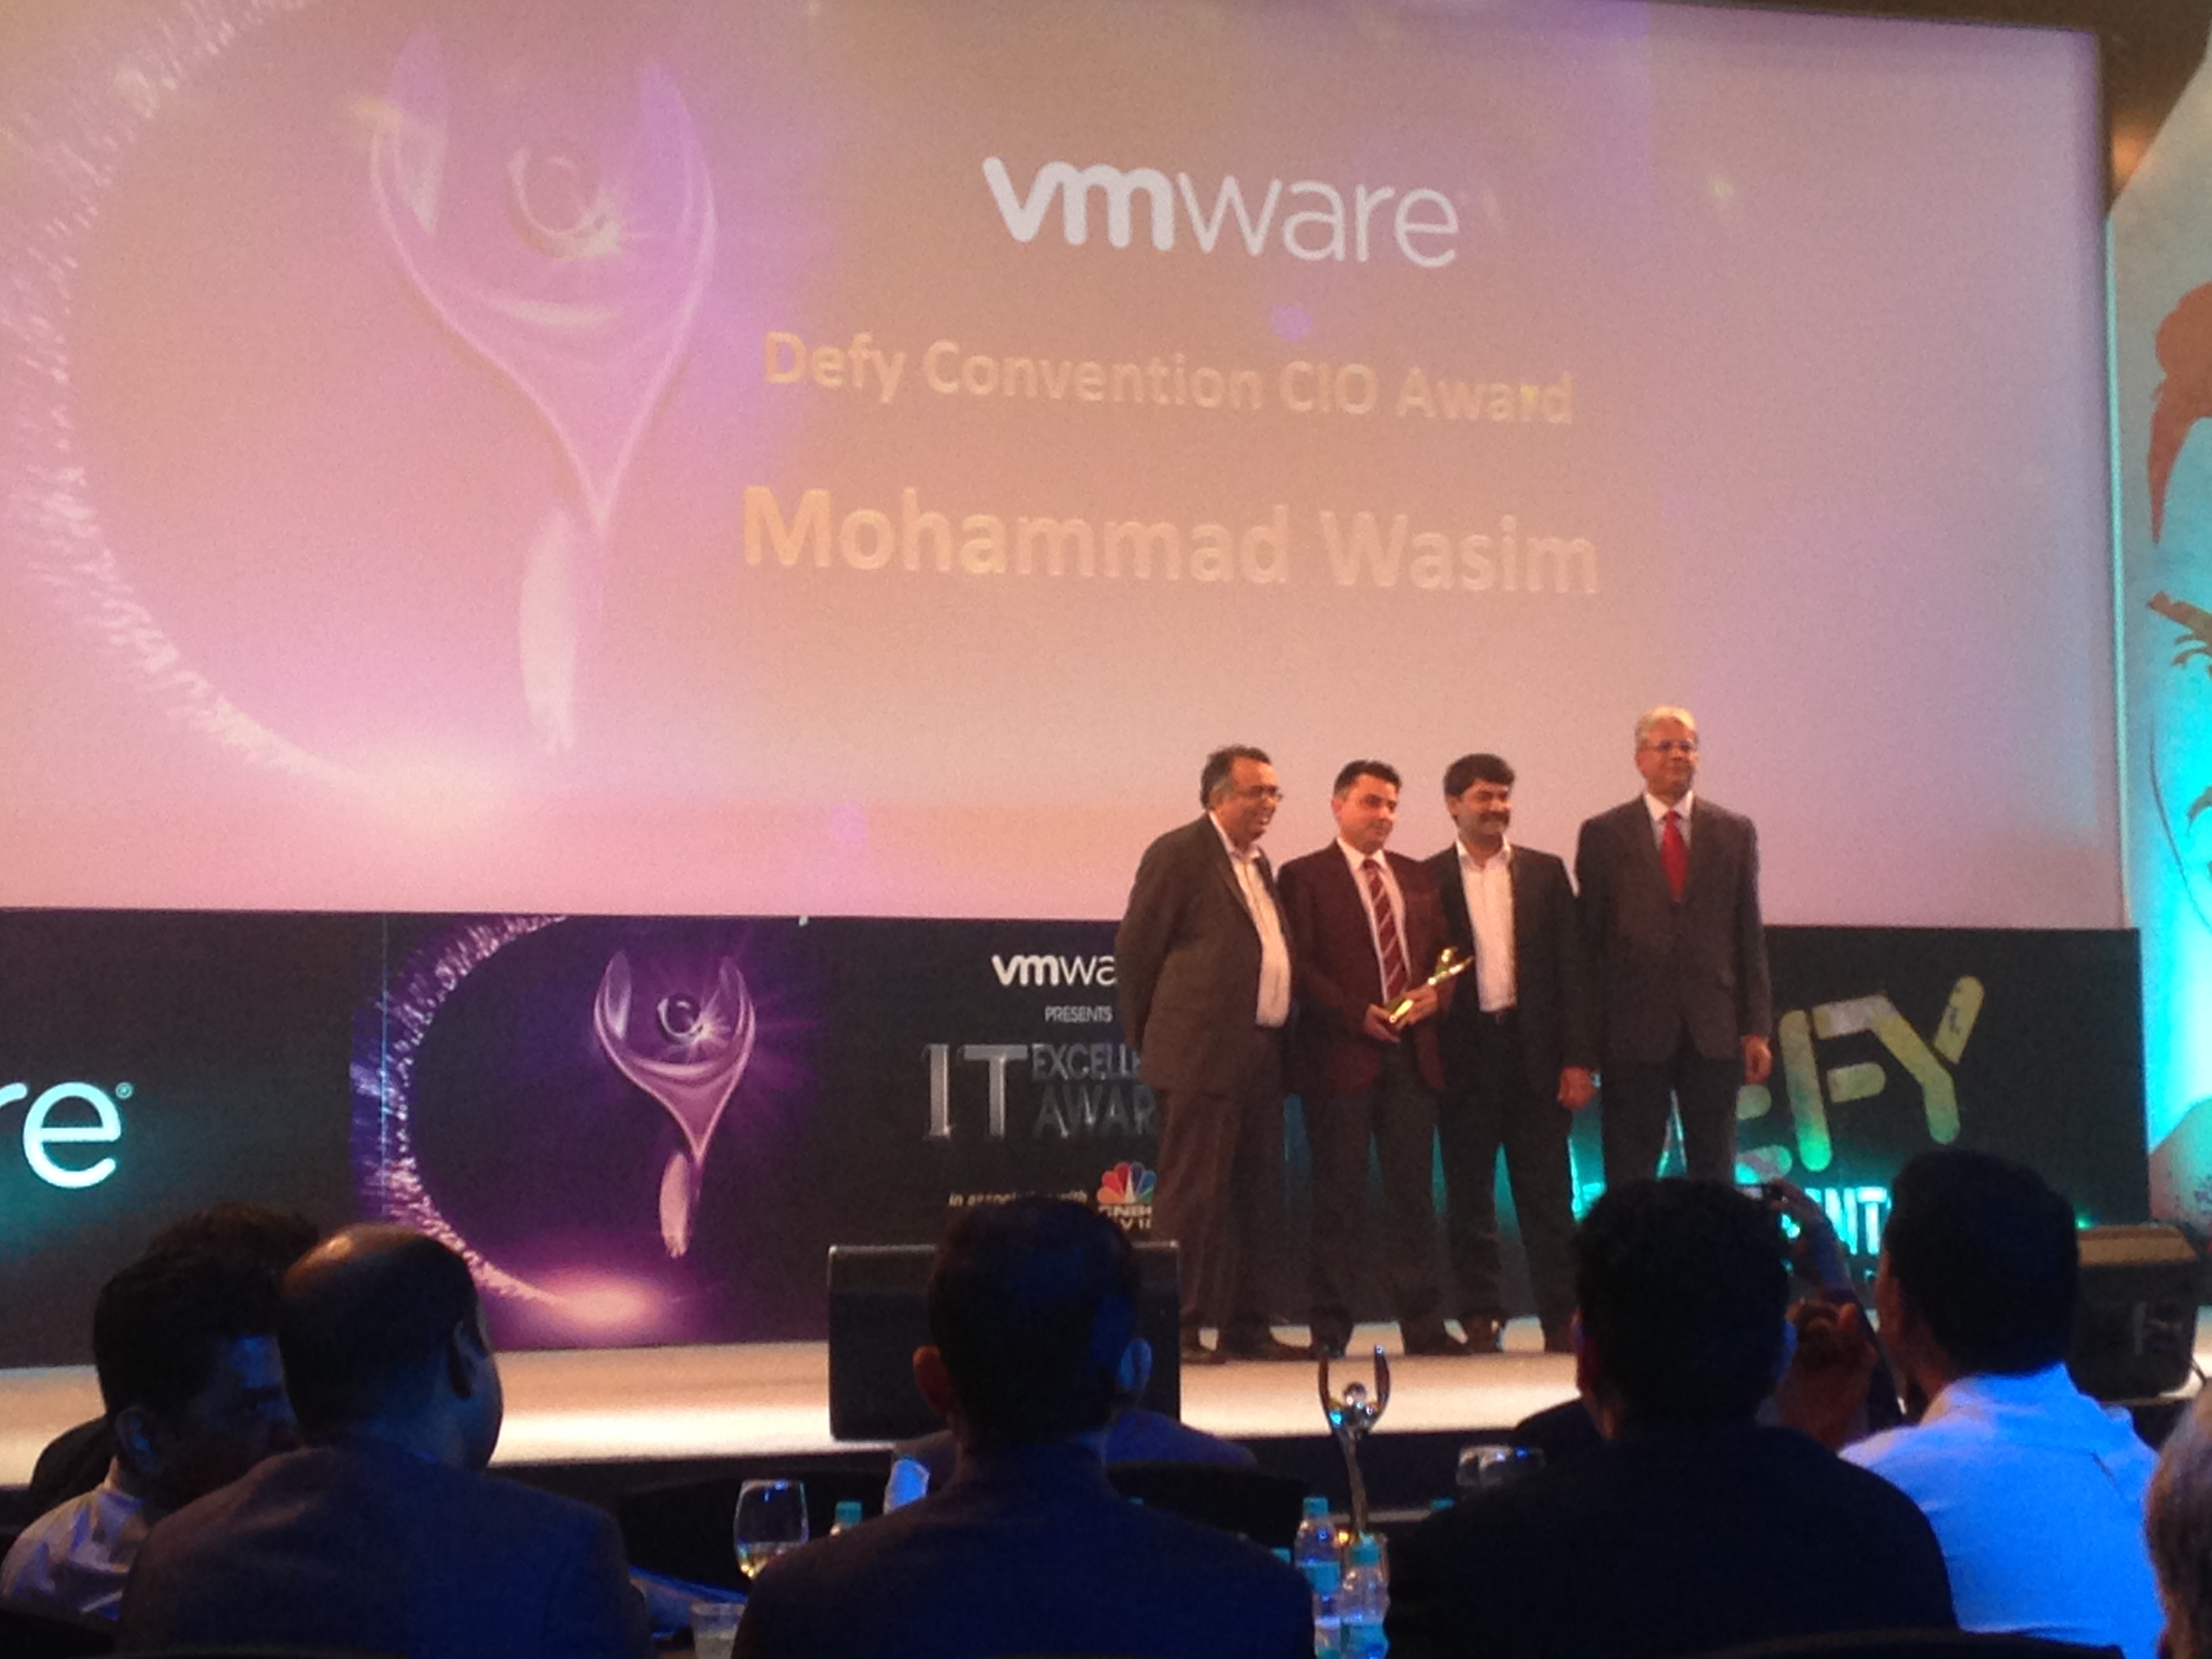 Mohammad Wasim winning the Defy Convention Award